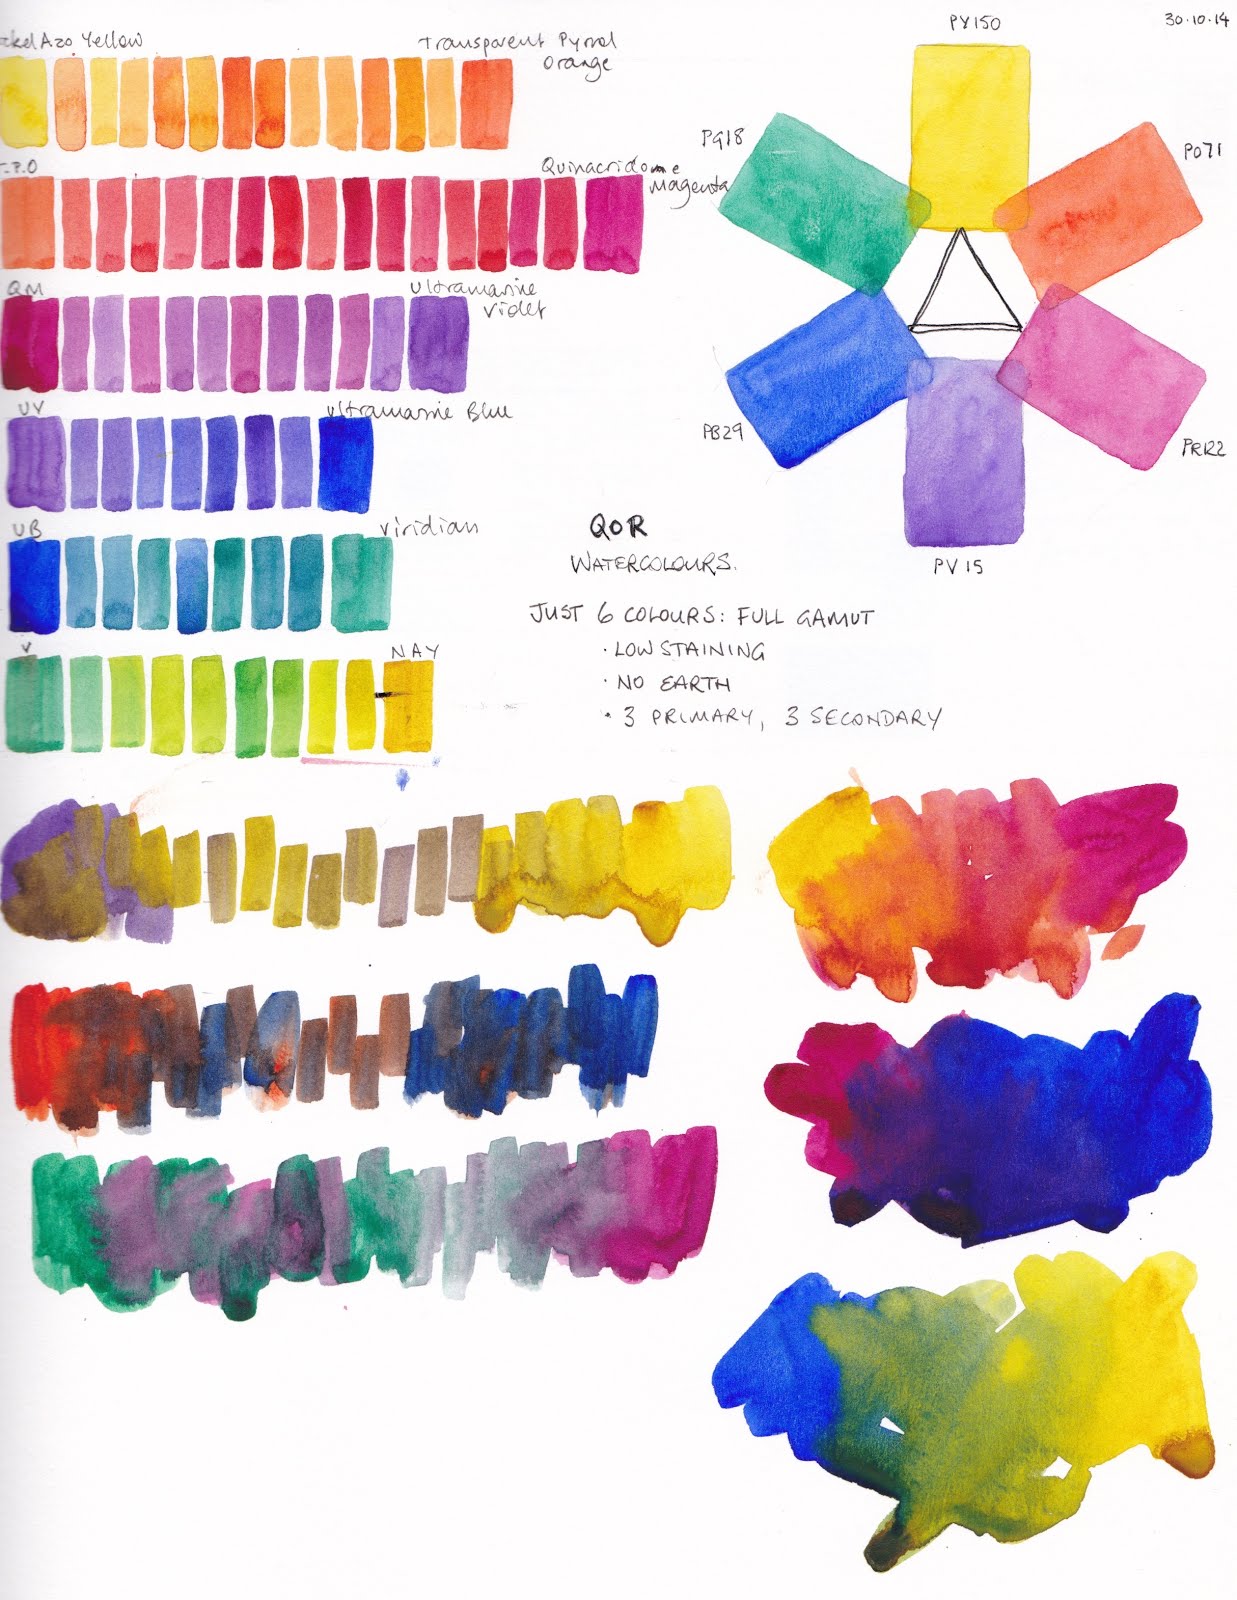 Qor Watercolor Introductory 6 Set Earth Colors